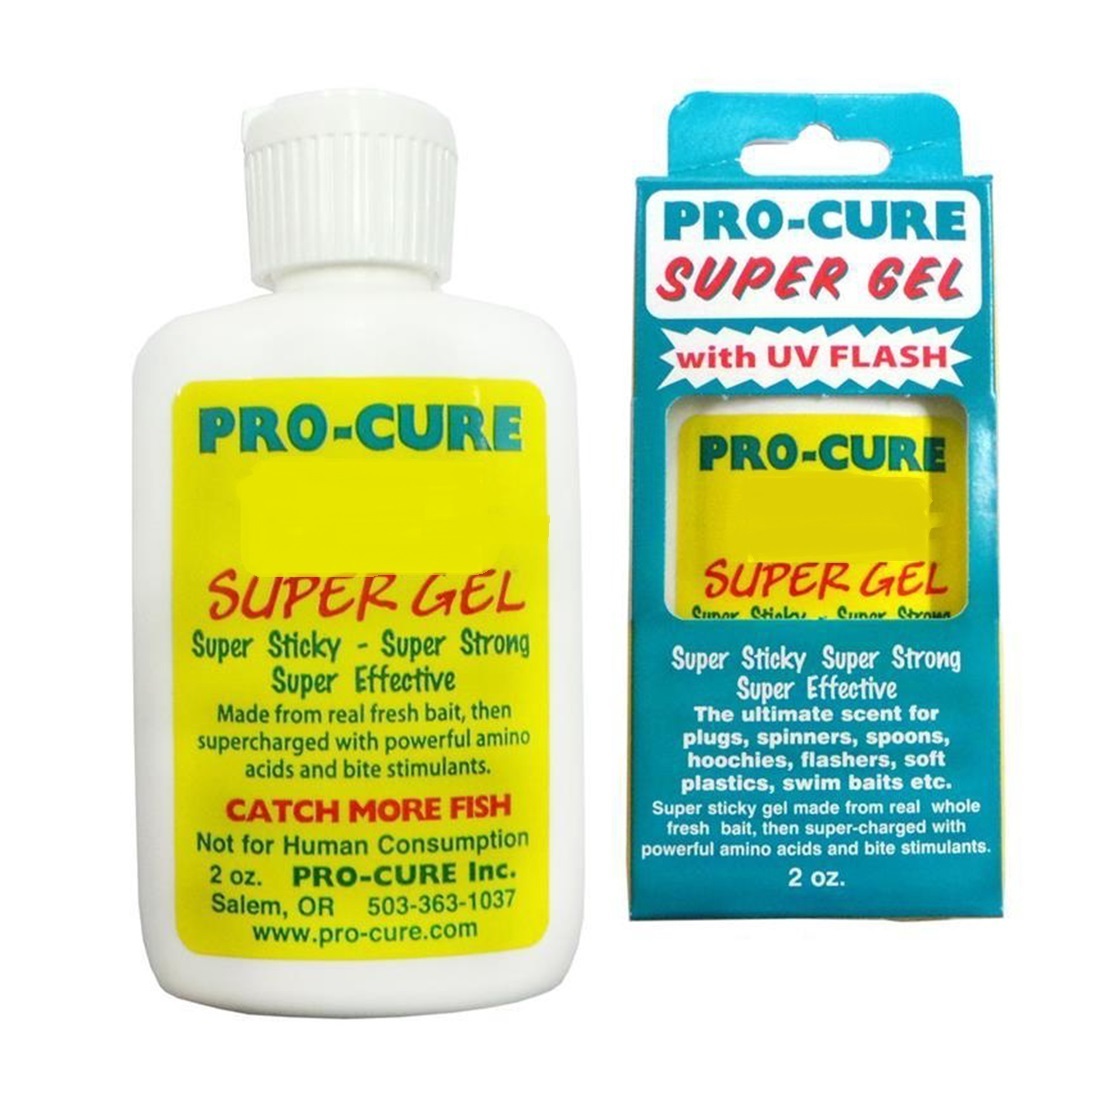 Pro-Cure Super Gel Scent With UV Flash - 2 oz Bottle [Scent: Inshore  Saltwater]